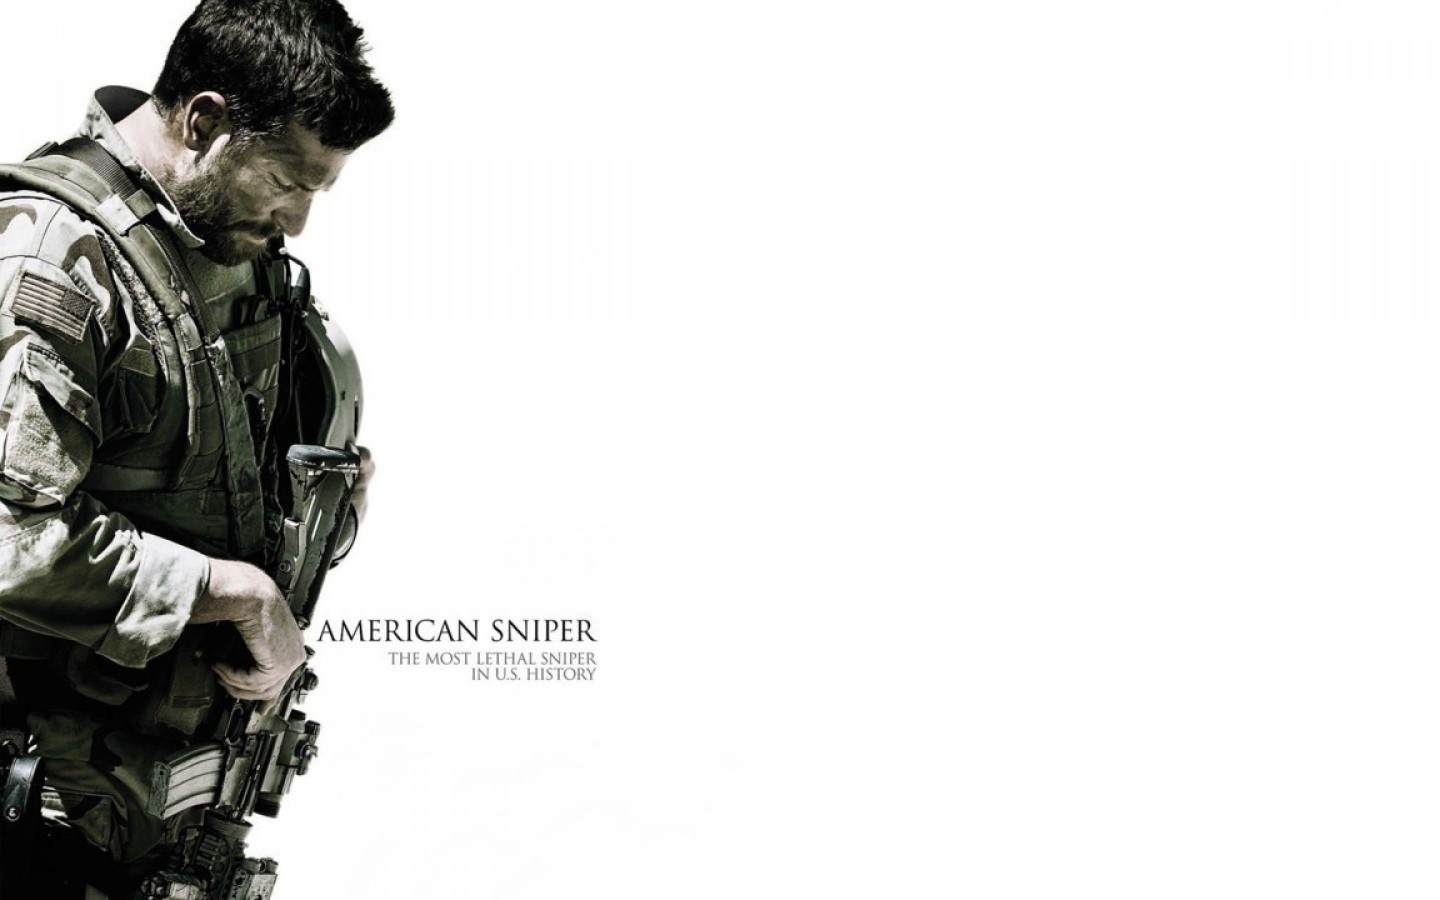 Bradley Cooper As Chris Kyle in American sniper Wallpaper for Desktop 1440x900